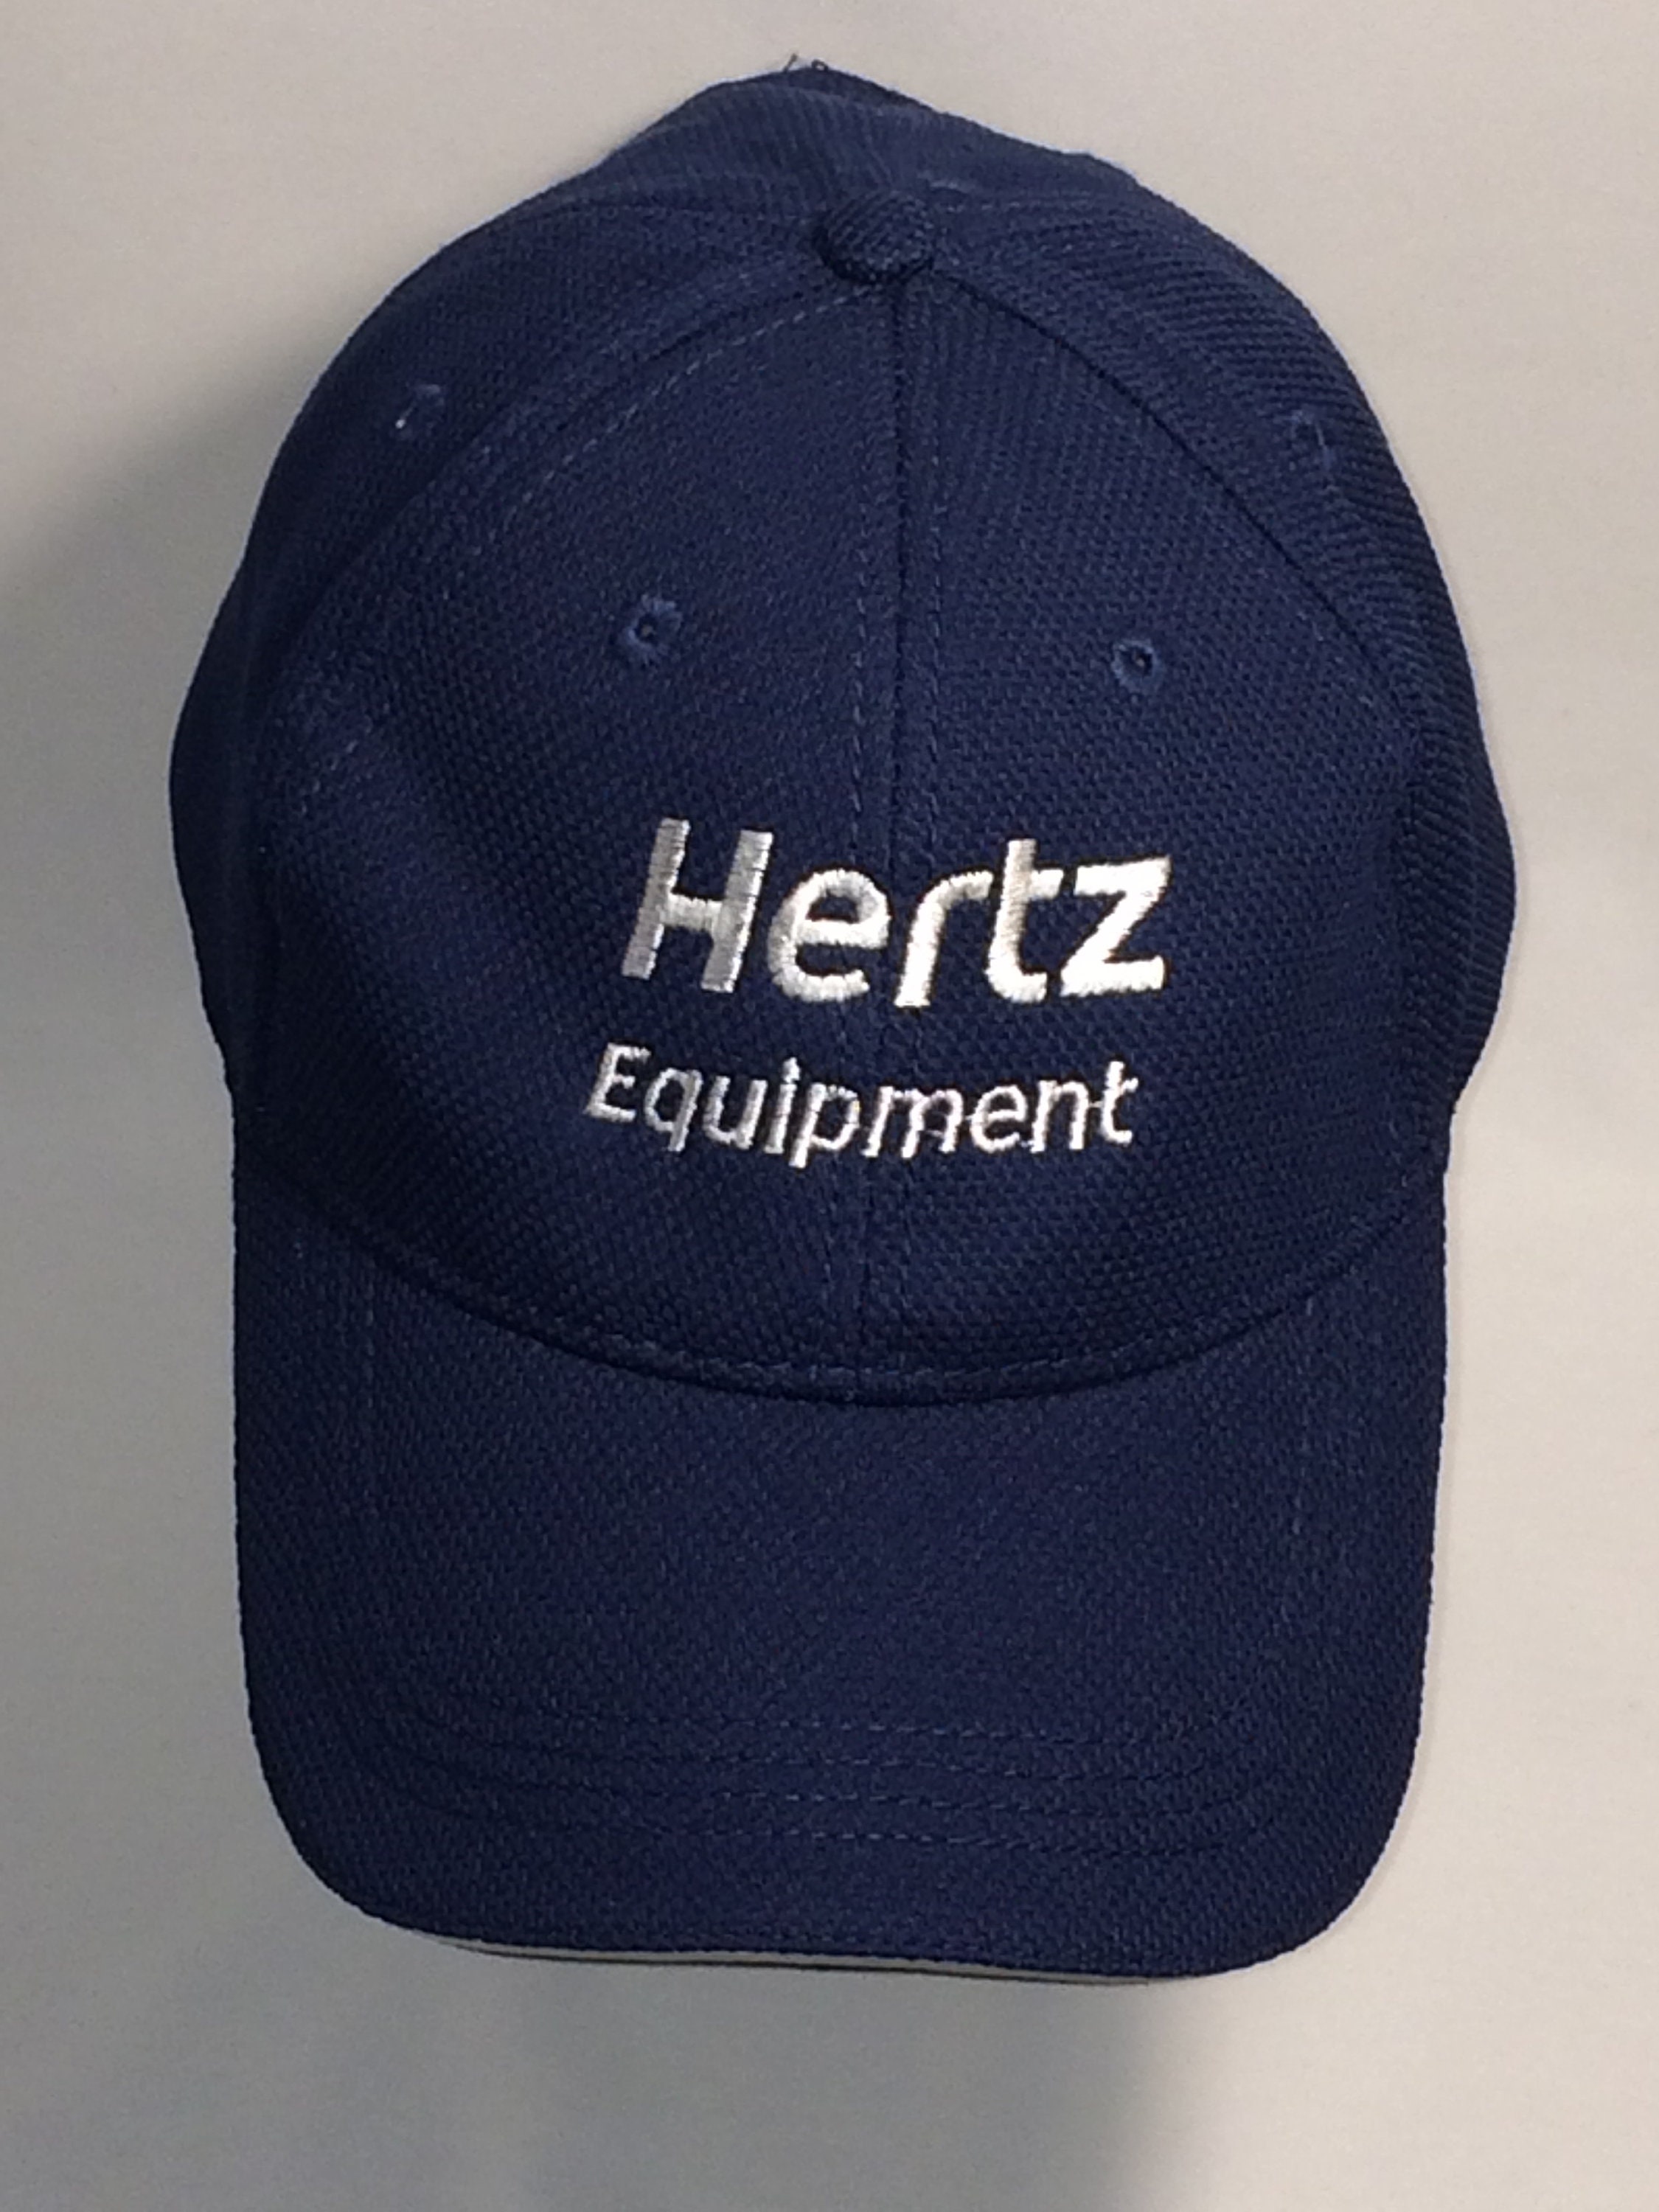 Vintage Equipment Hat Hertz Baseball Cap Dad Hats Construction | Etsy